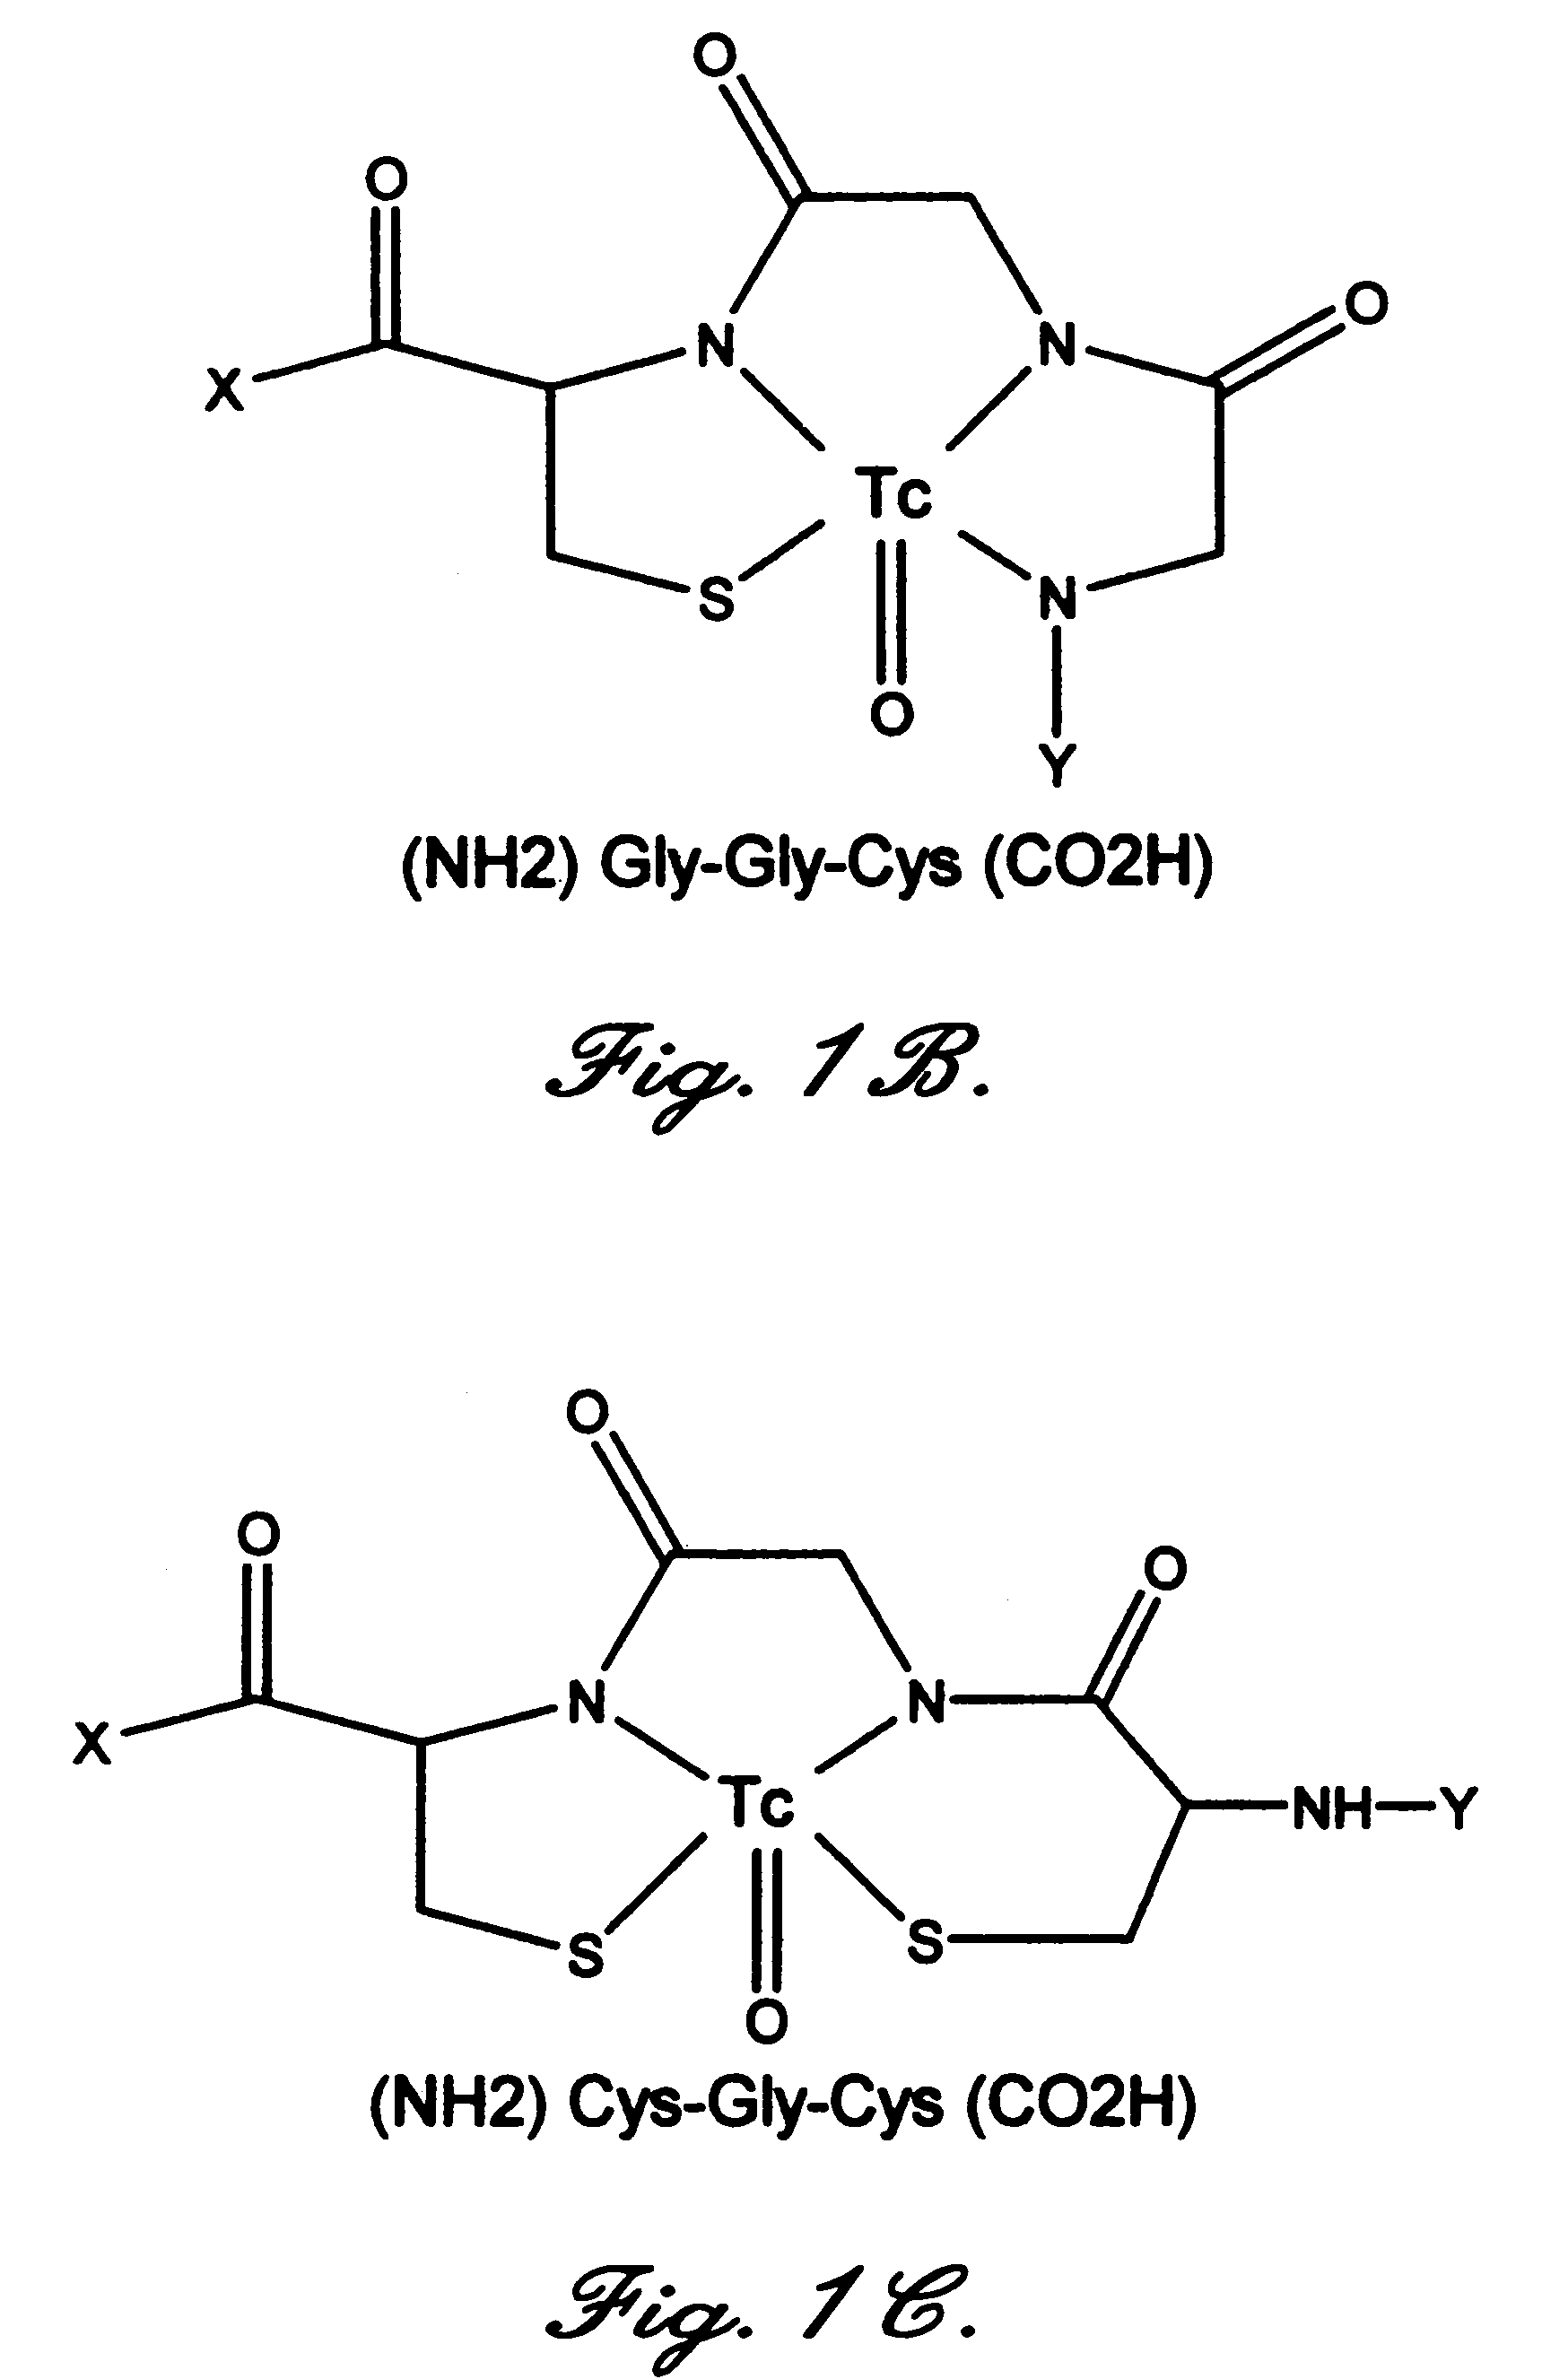 Annexin derivatives with endogenous chelation sites